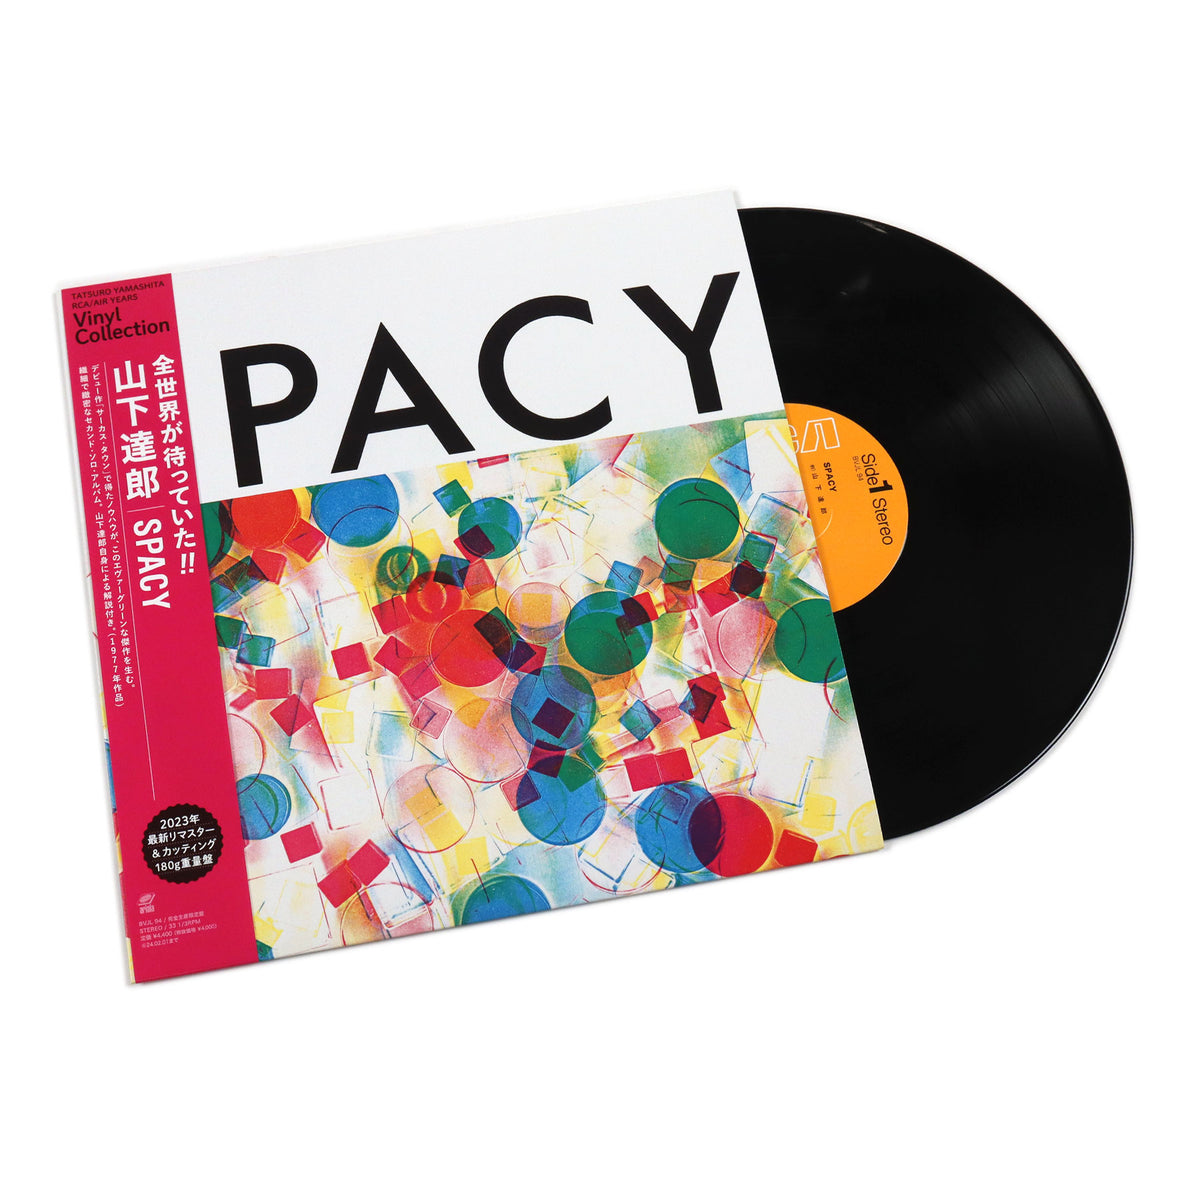 Tatsuro Yamashita: Spacy (180g, Japan Import) Vinyl LP - LIMIT 1 